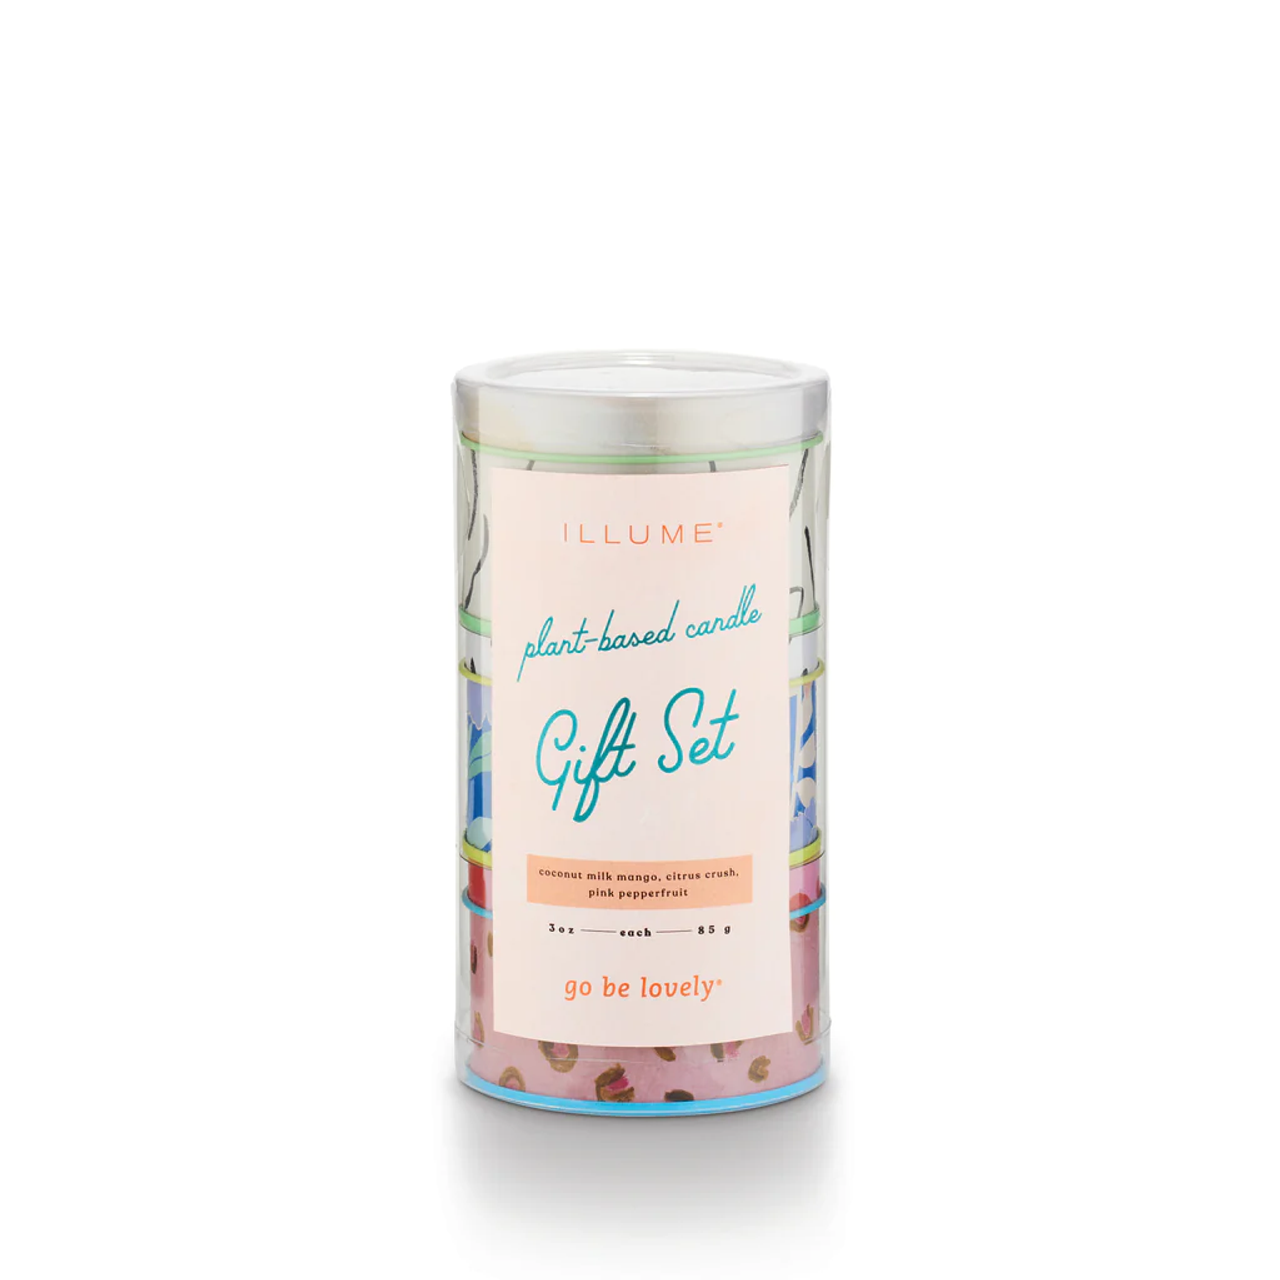 Illume Balsam & Cedar Mini Tin Candle